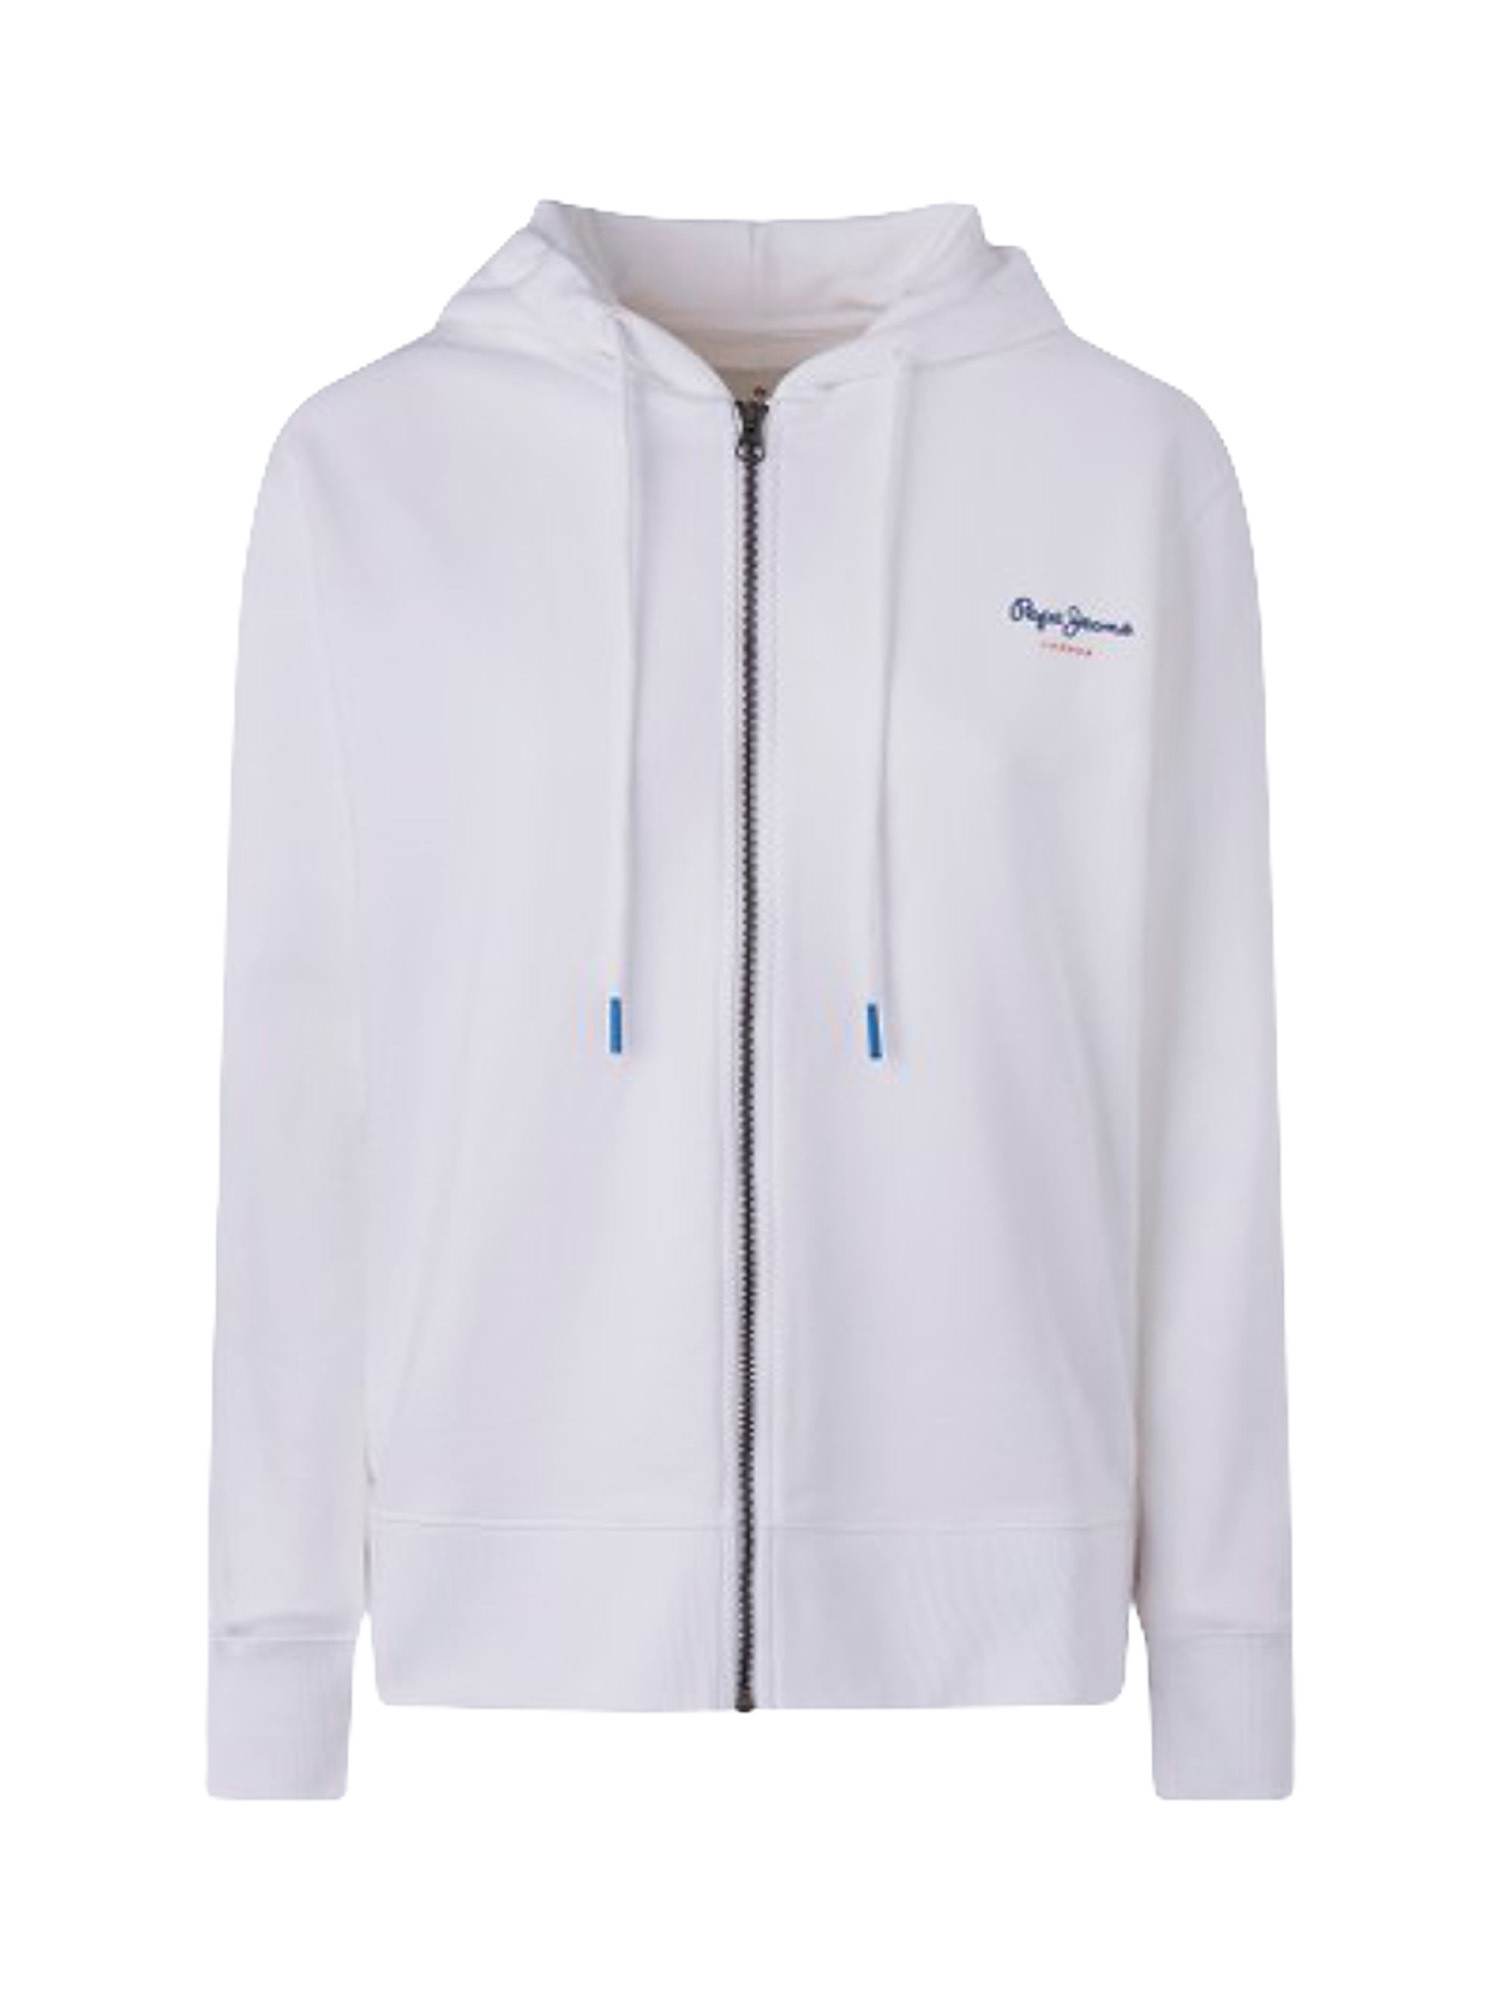 Calista zipper sport jacket, White, large image number 0